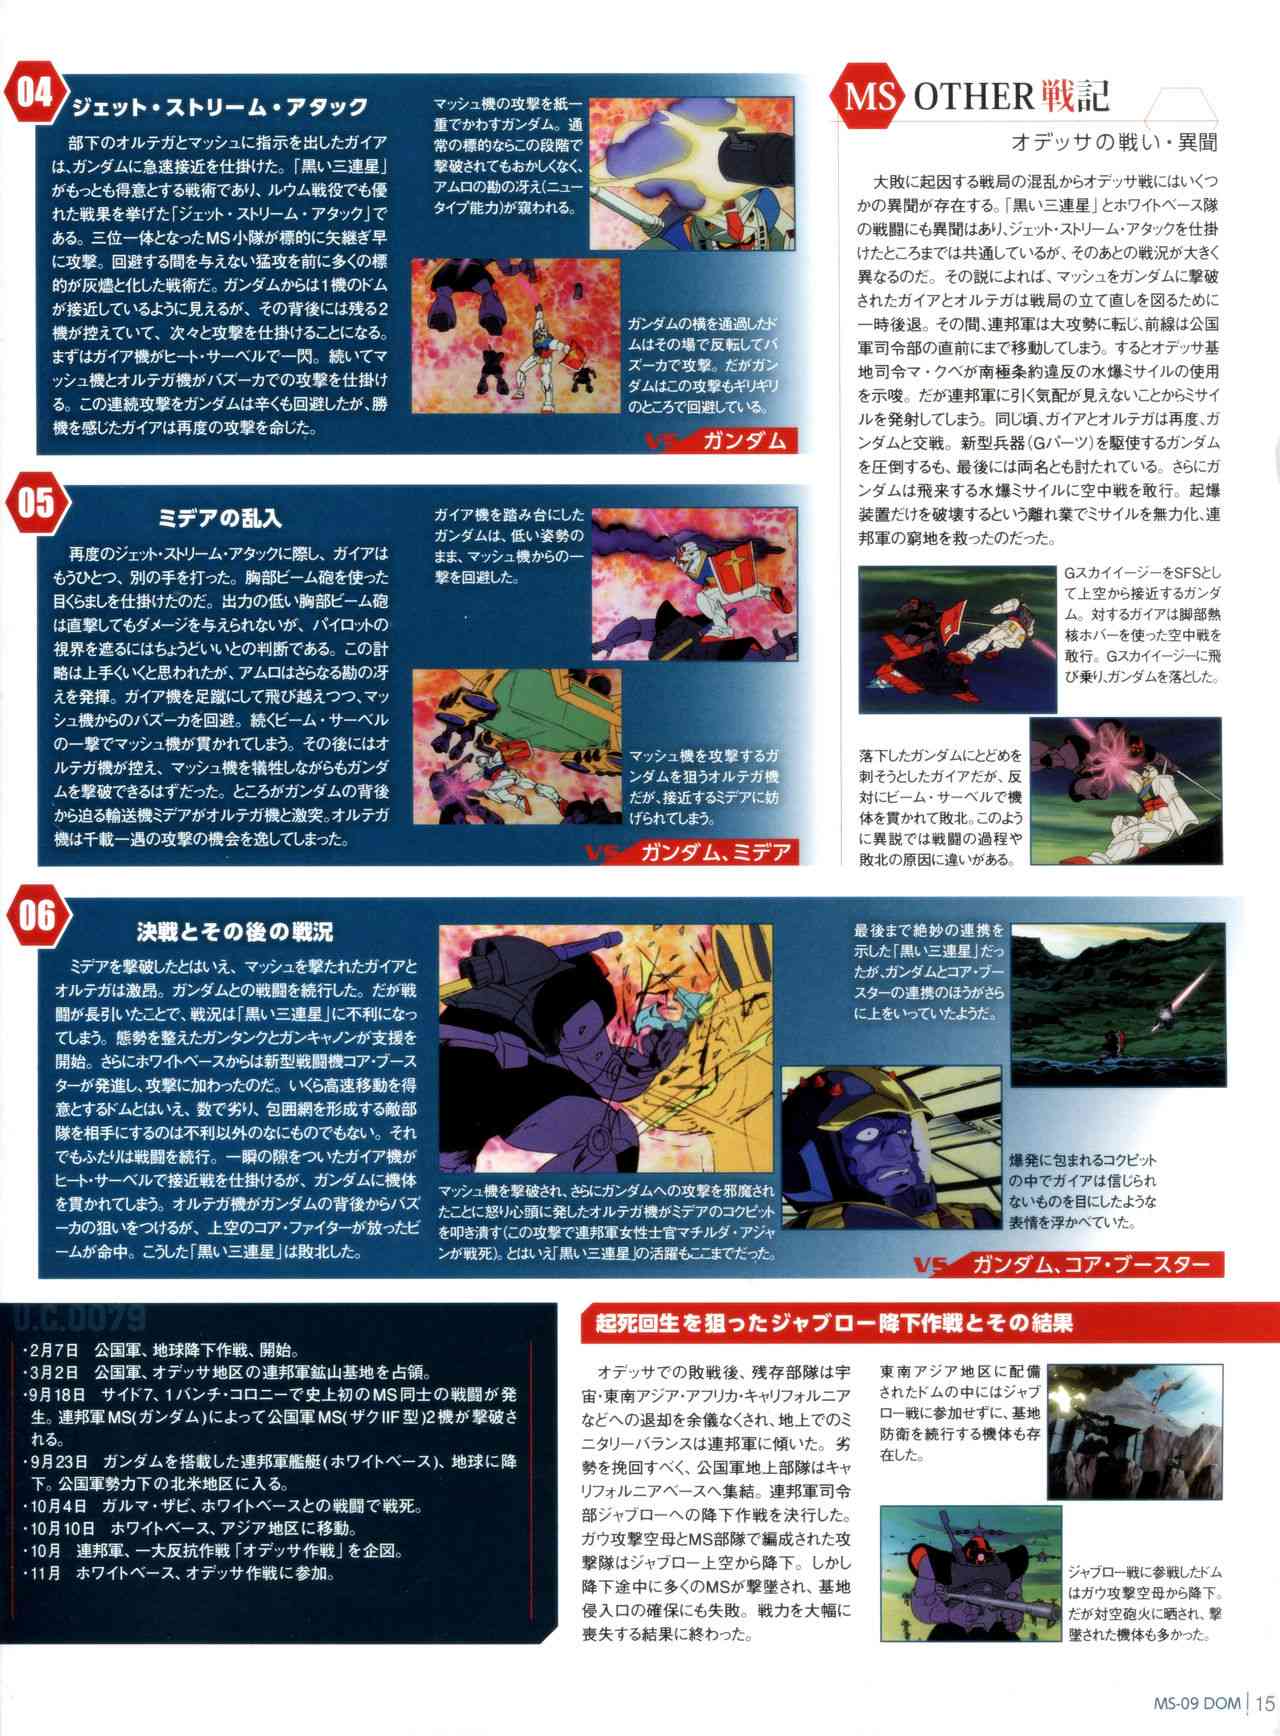 Gundam Mobile Suit Bible - 42卷 - 3